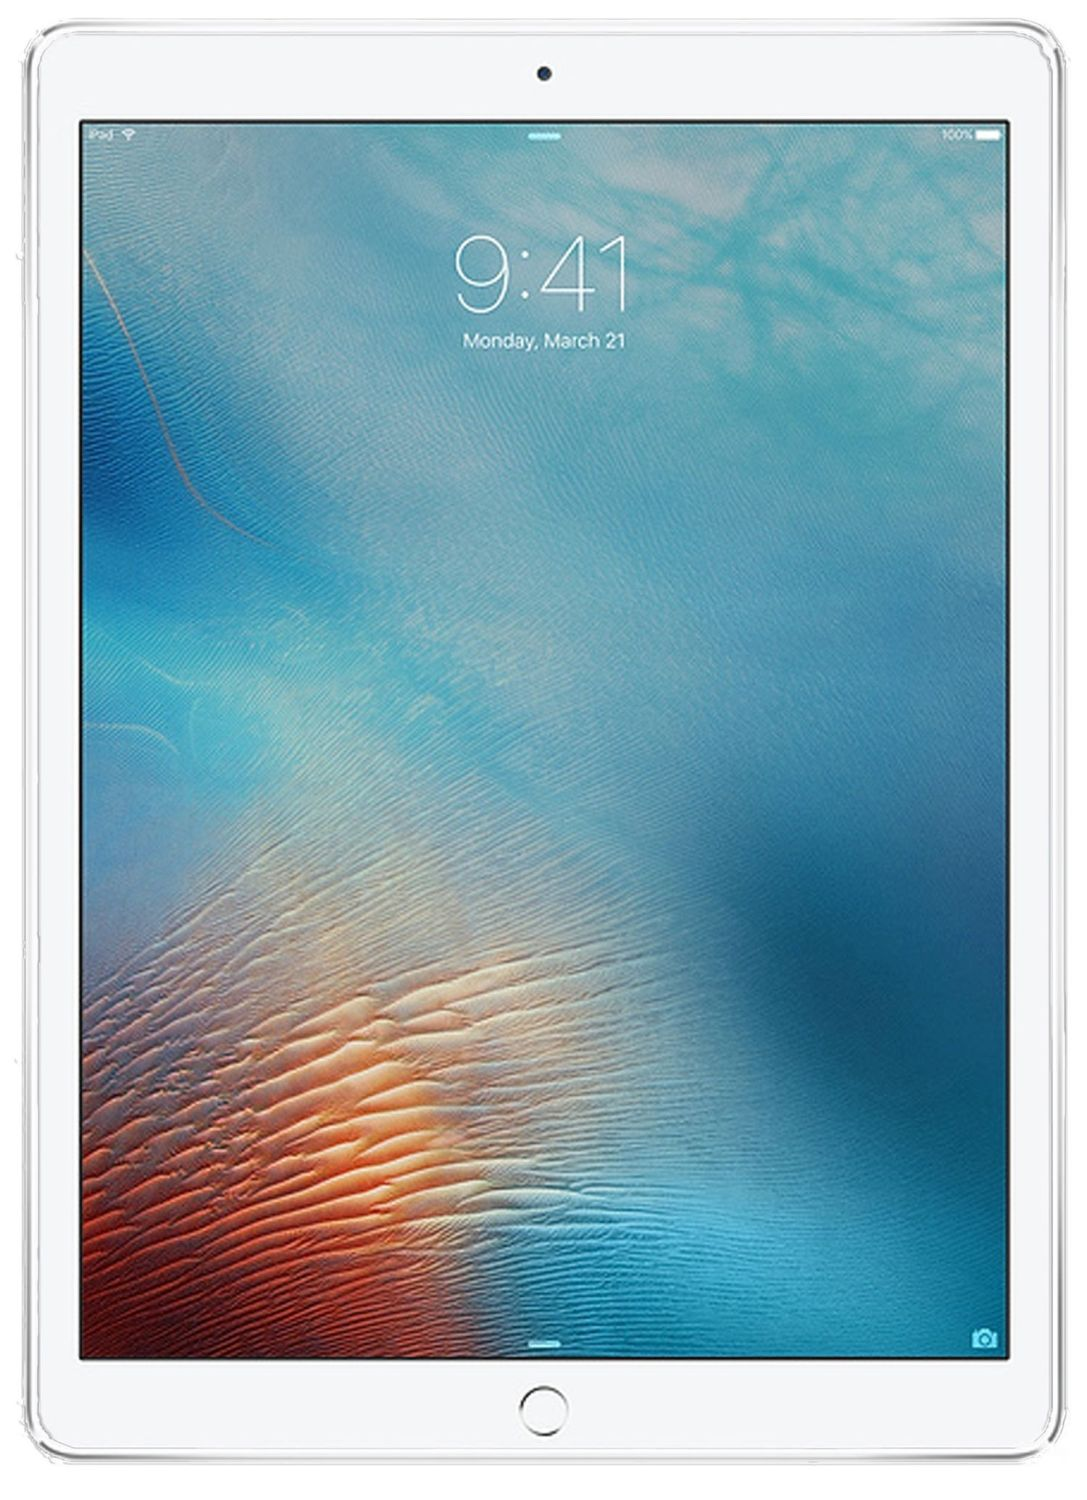 COFI Tablet Hülle Transparent Case (2015) Silikon Apple Pro Bumper Cover iPad 12.9 Kunststoff, für